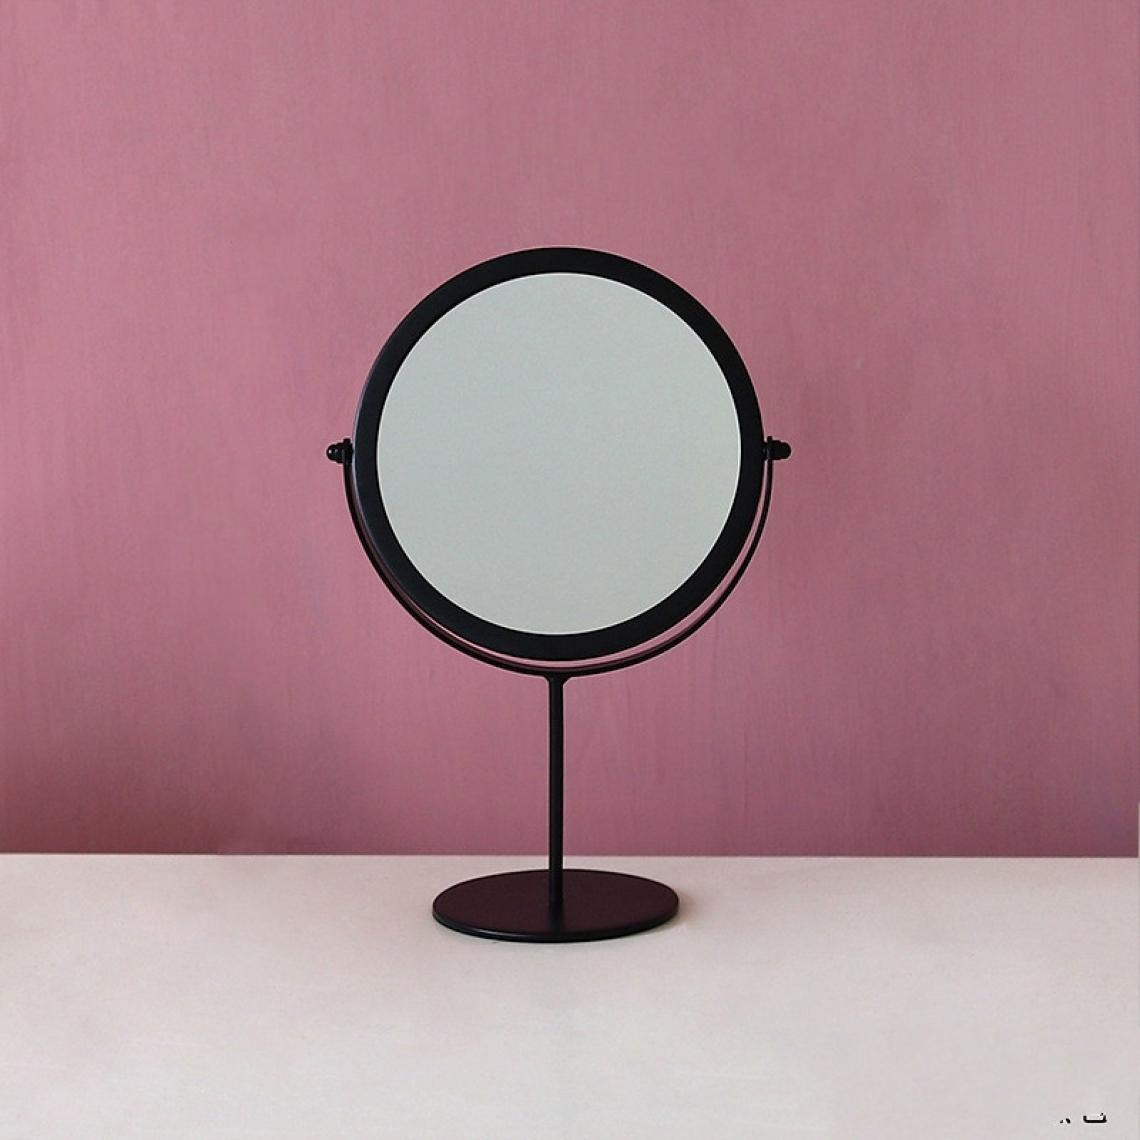 Wewoo - Miroir à pansement simple en fer forgé rond châssis noir - Miroirs